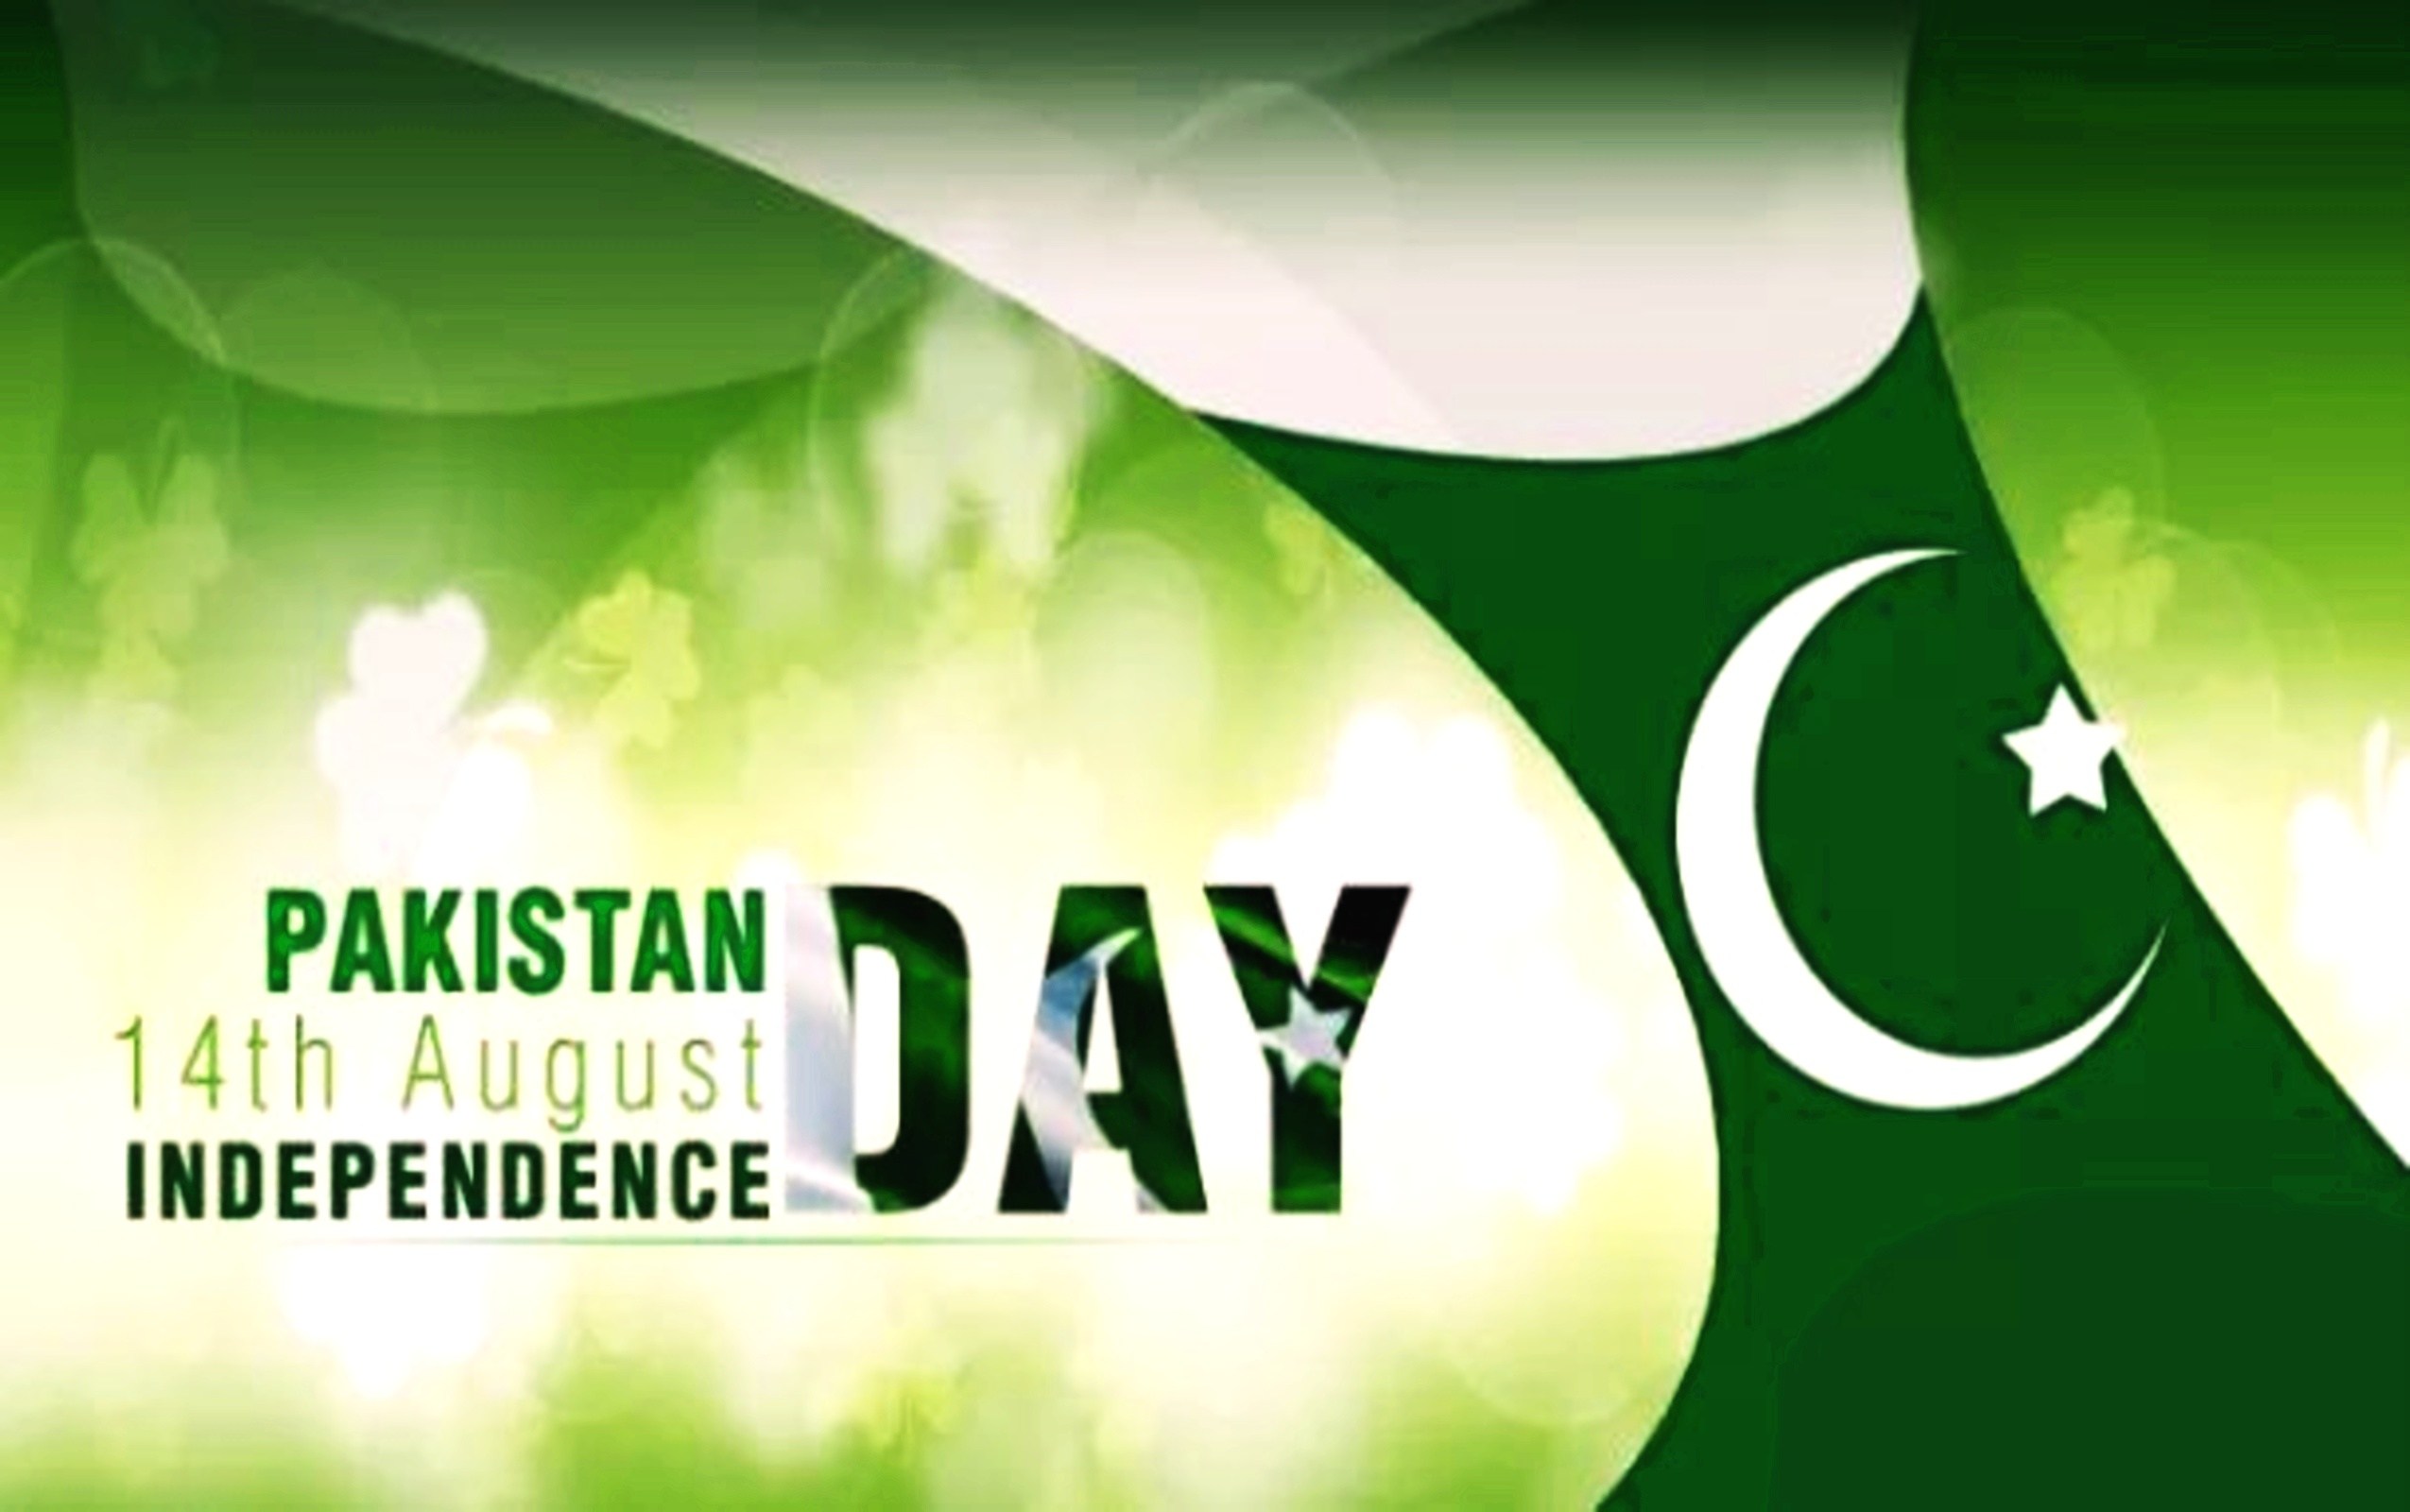 Pakistan Independence Day Image Wallpaper HD 4k